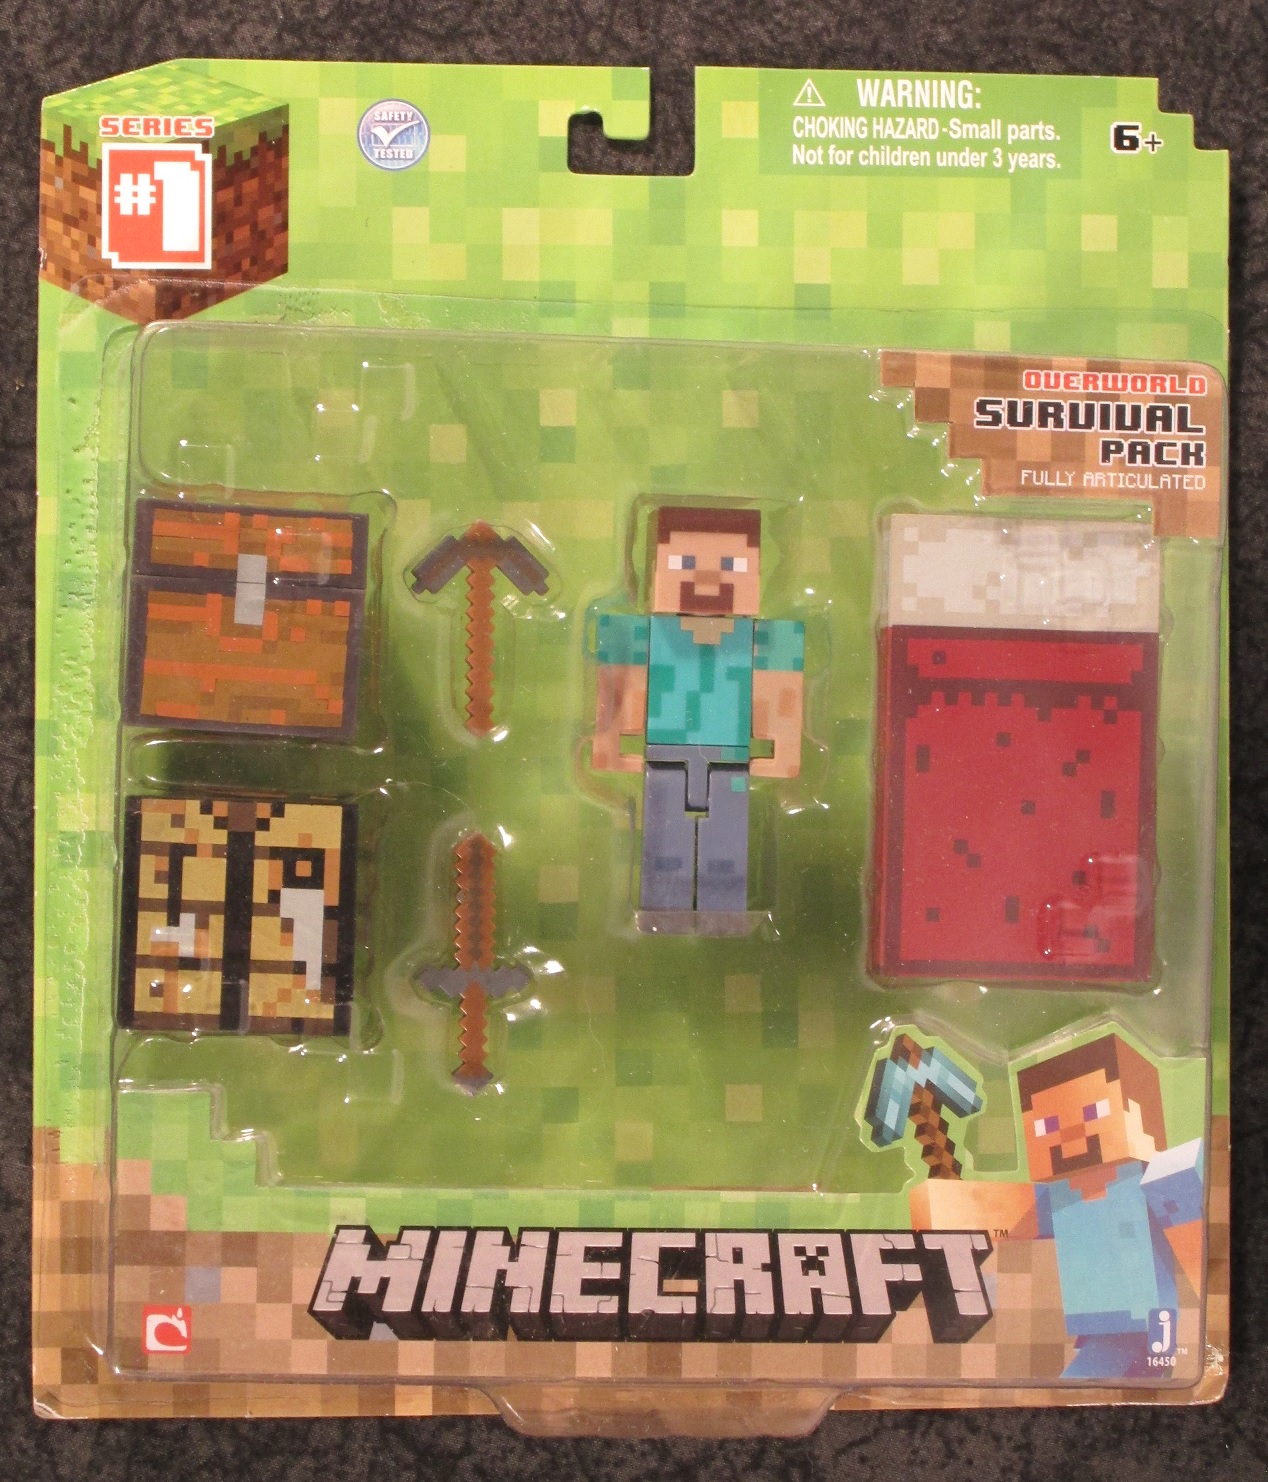 Minecraft Survival Pack Overworld Steve 6pc Set Series 1 Bed Axe sword Box Chest 